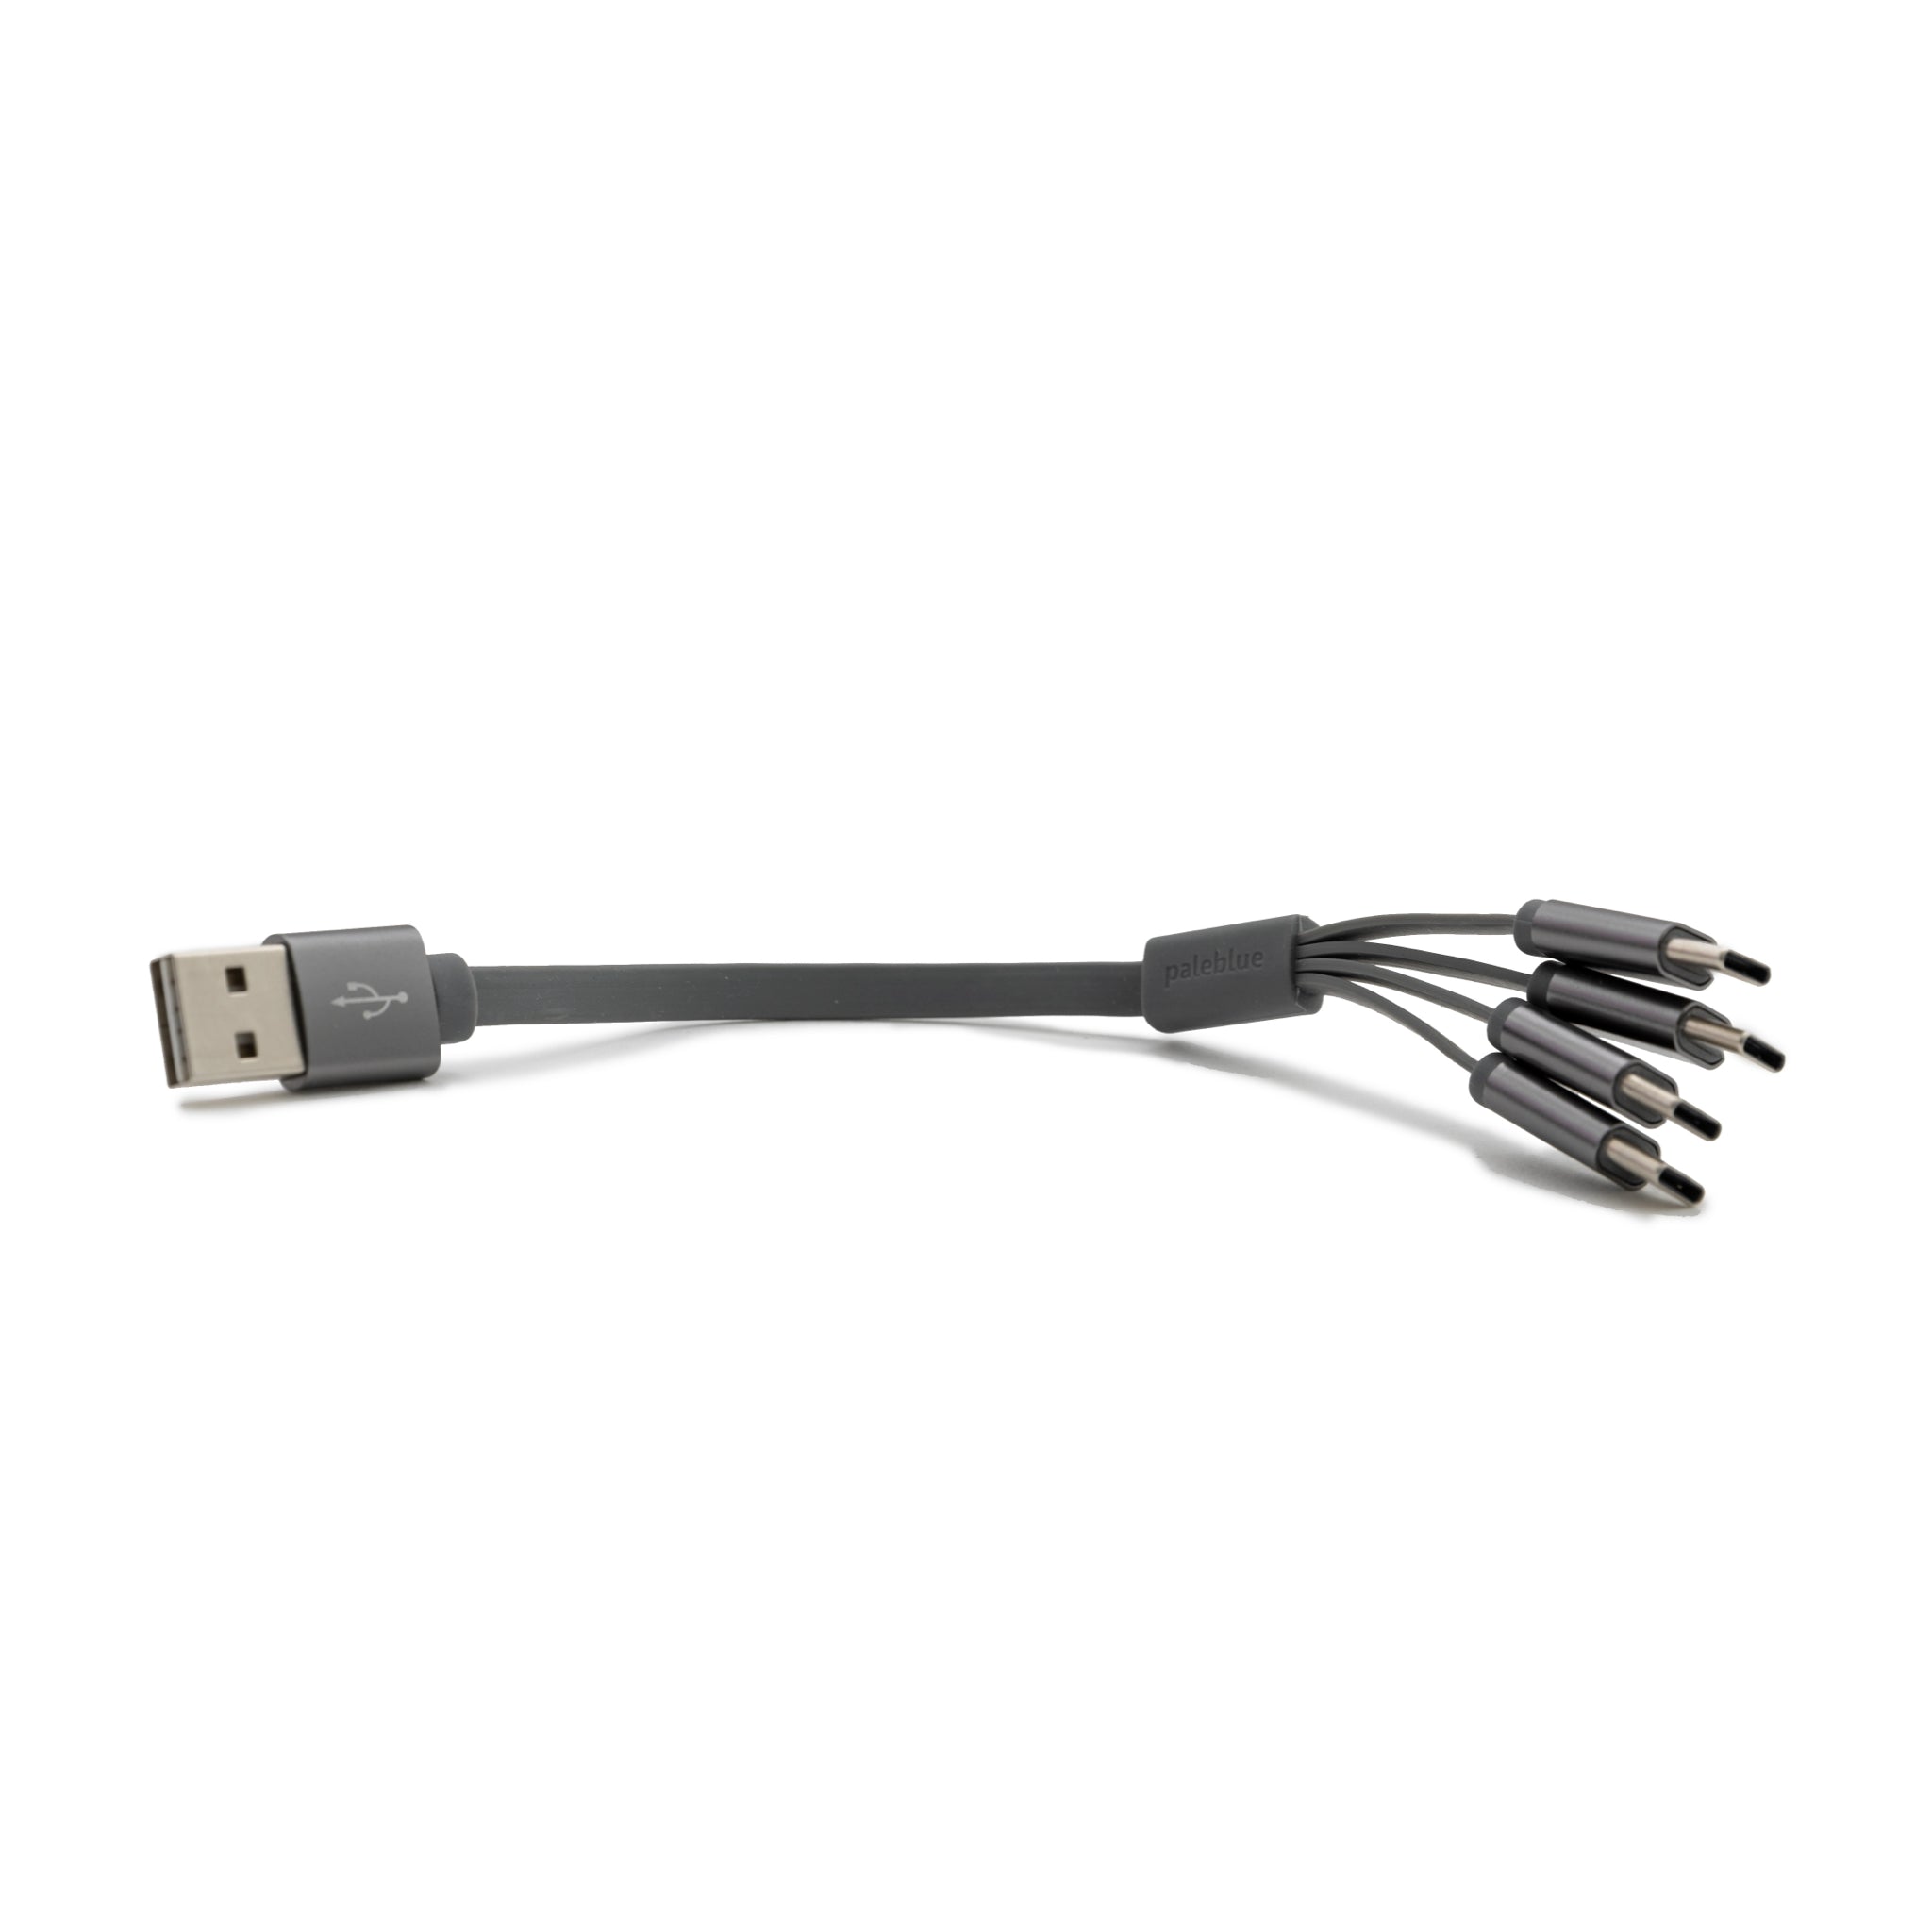 USB-C Cable 4X (20cm)